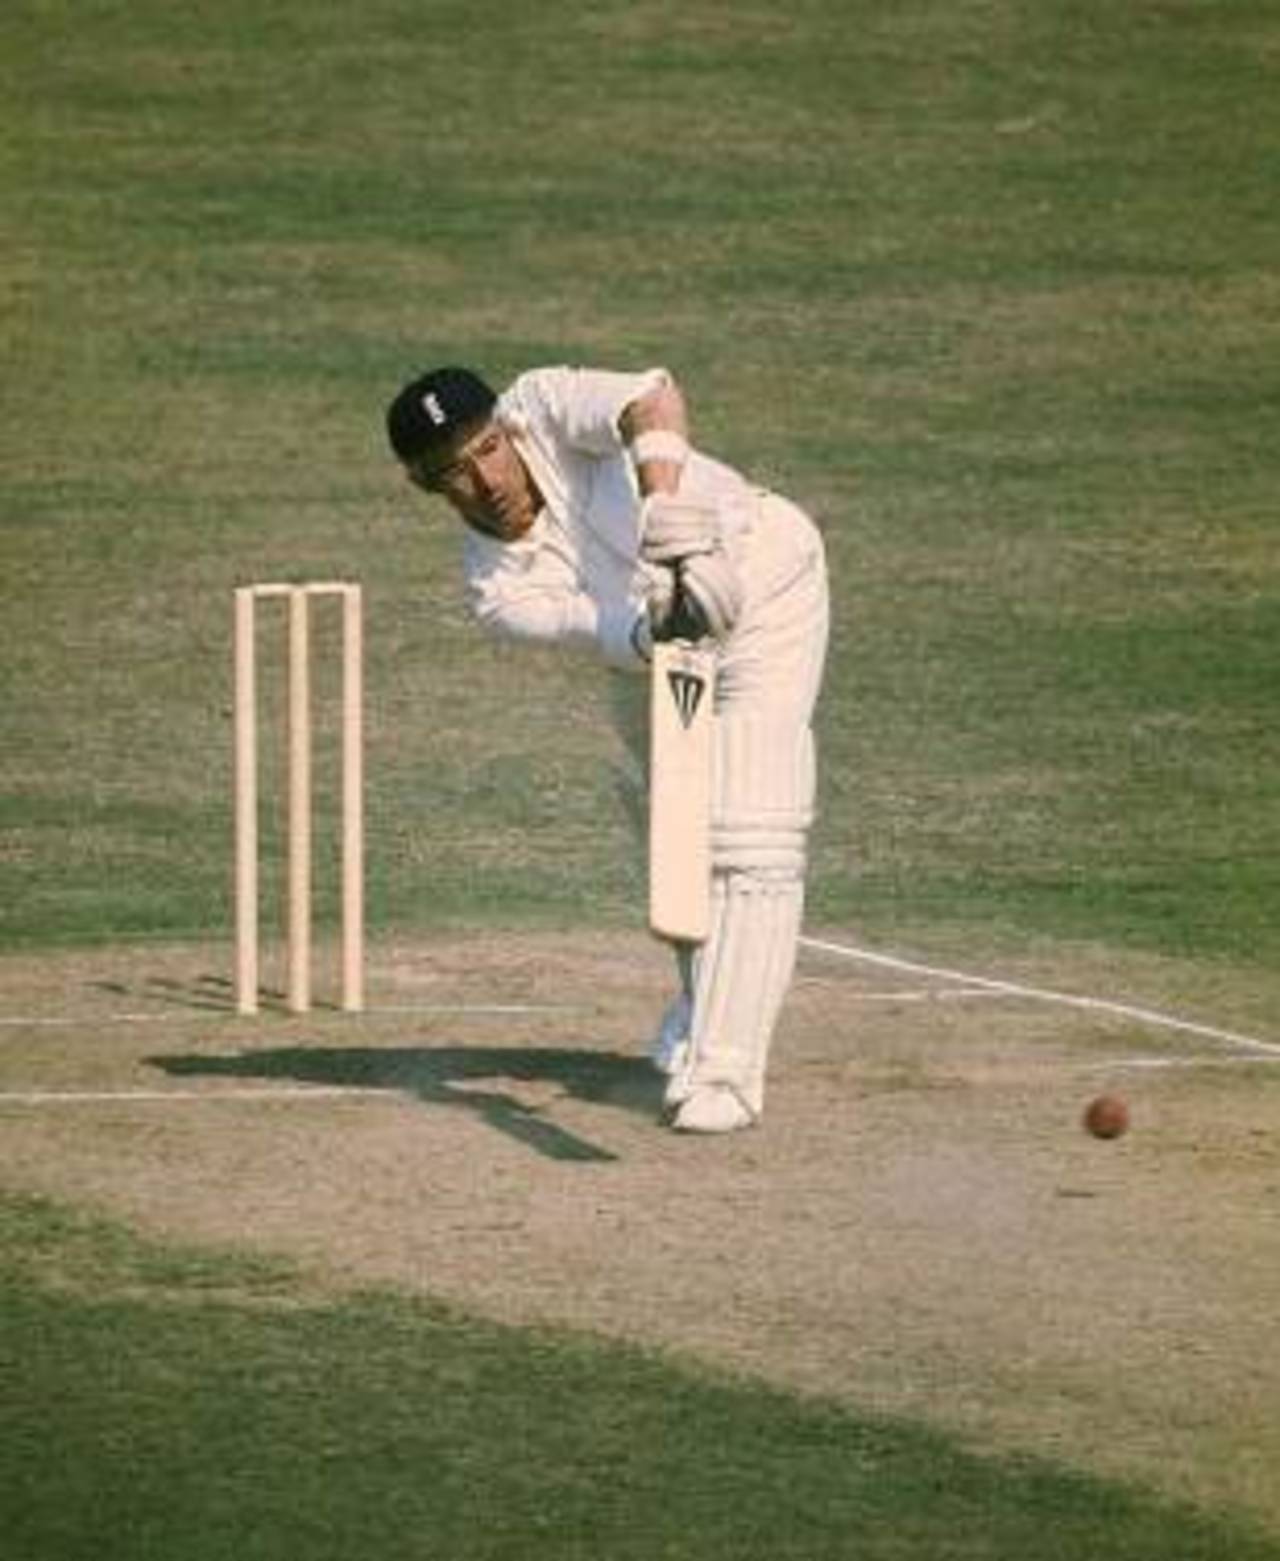 David Steele batting against Australia, Lord's, July 1975